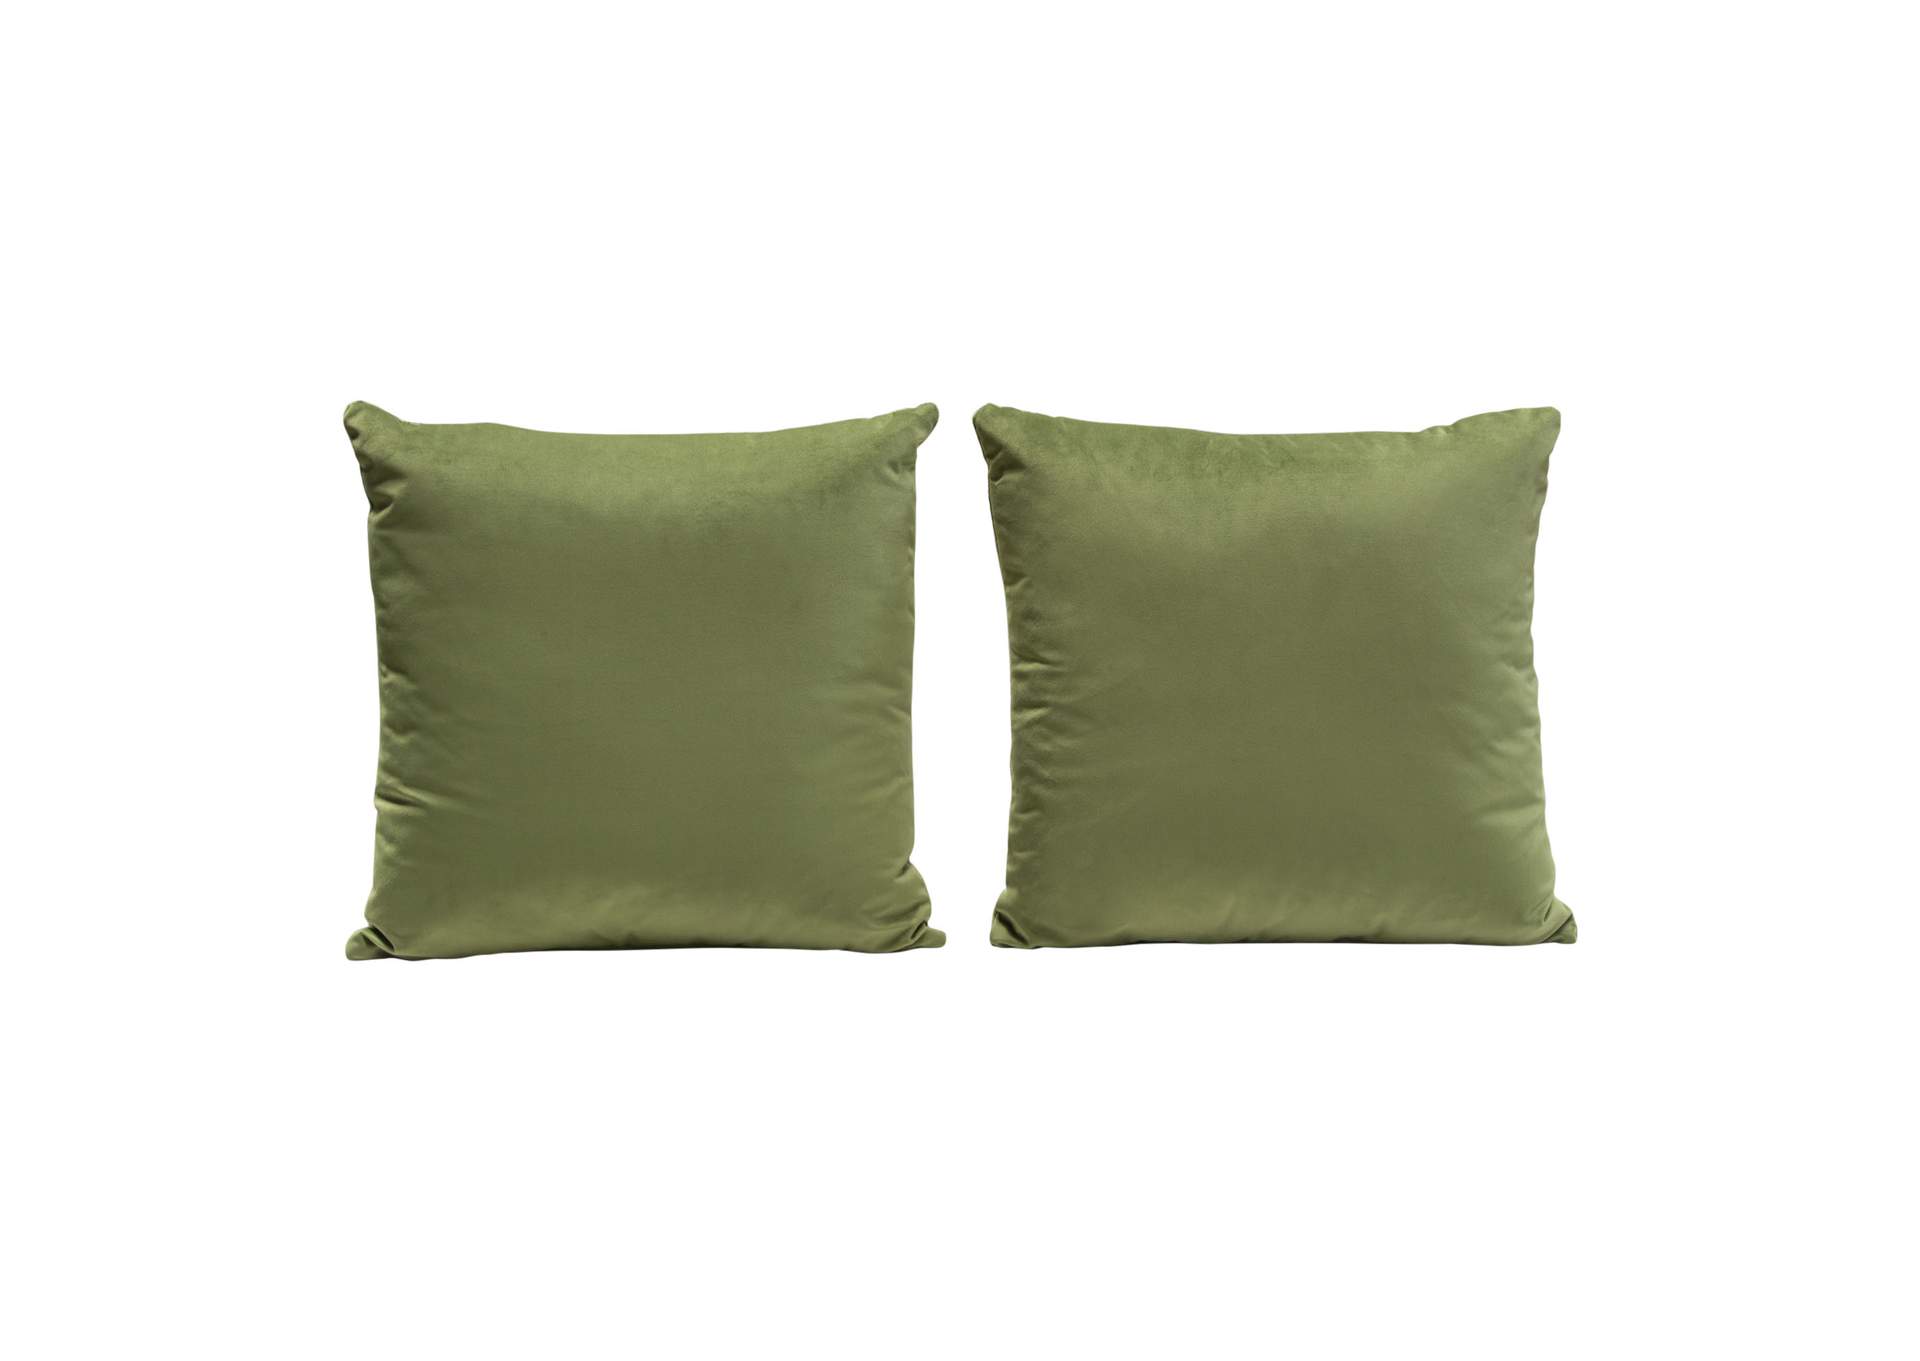 Set of (2) 16" Square Accent Pillows in Sage Green Velvet by Diamond Sofa,Diamond Sofa